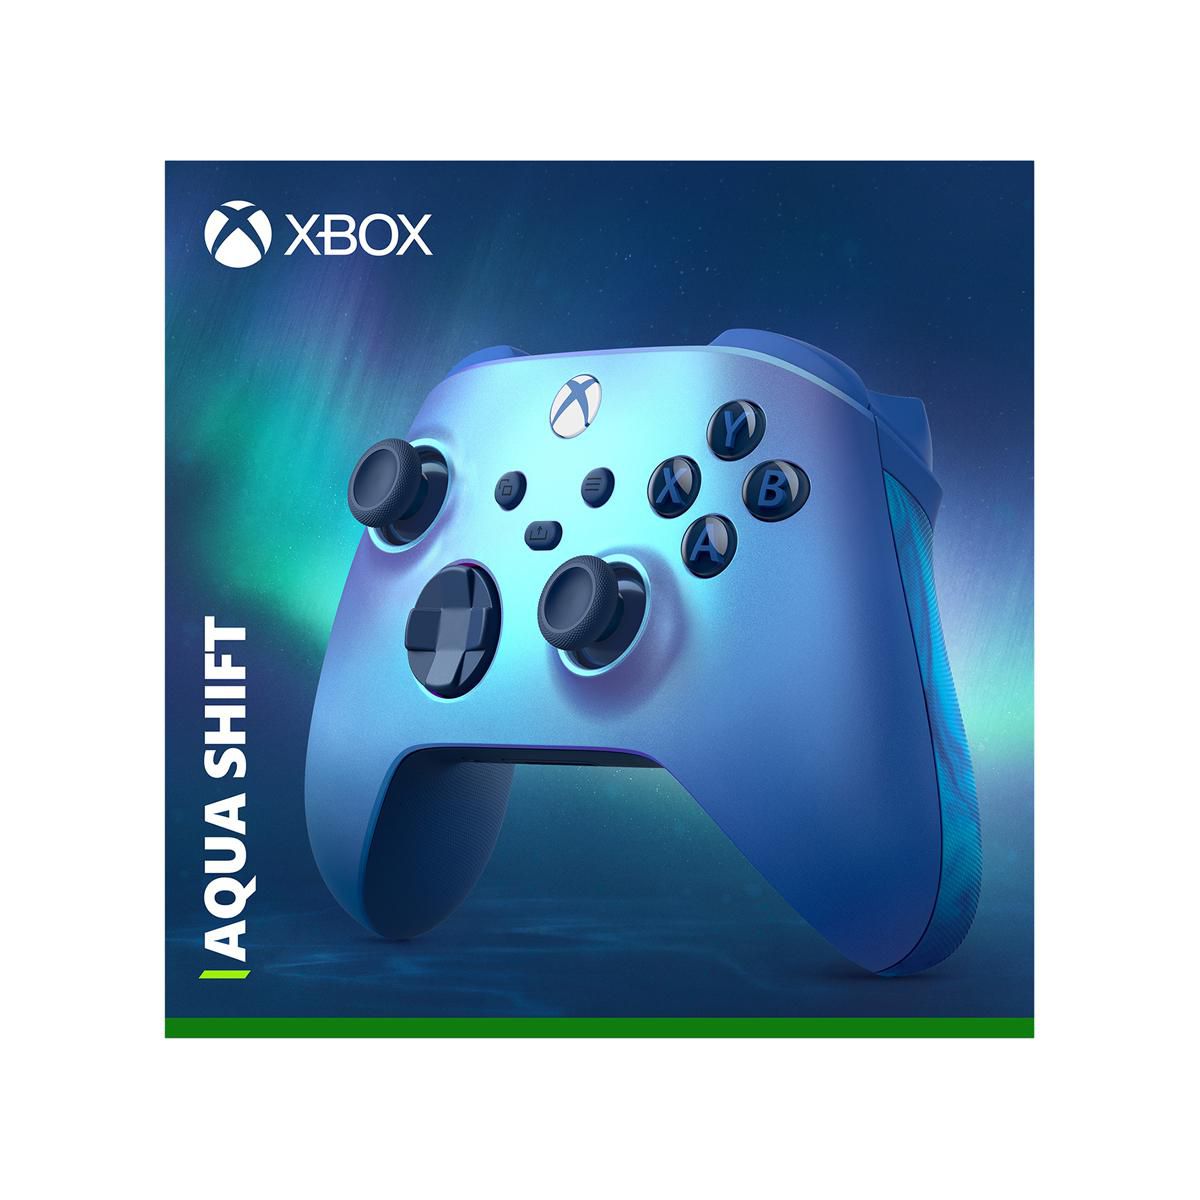 Xbox Wireless Controller – Aqua Shift Special Edition for Xbox 